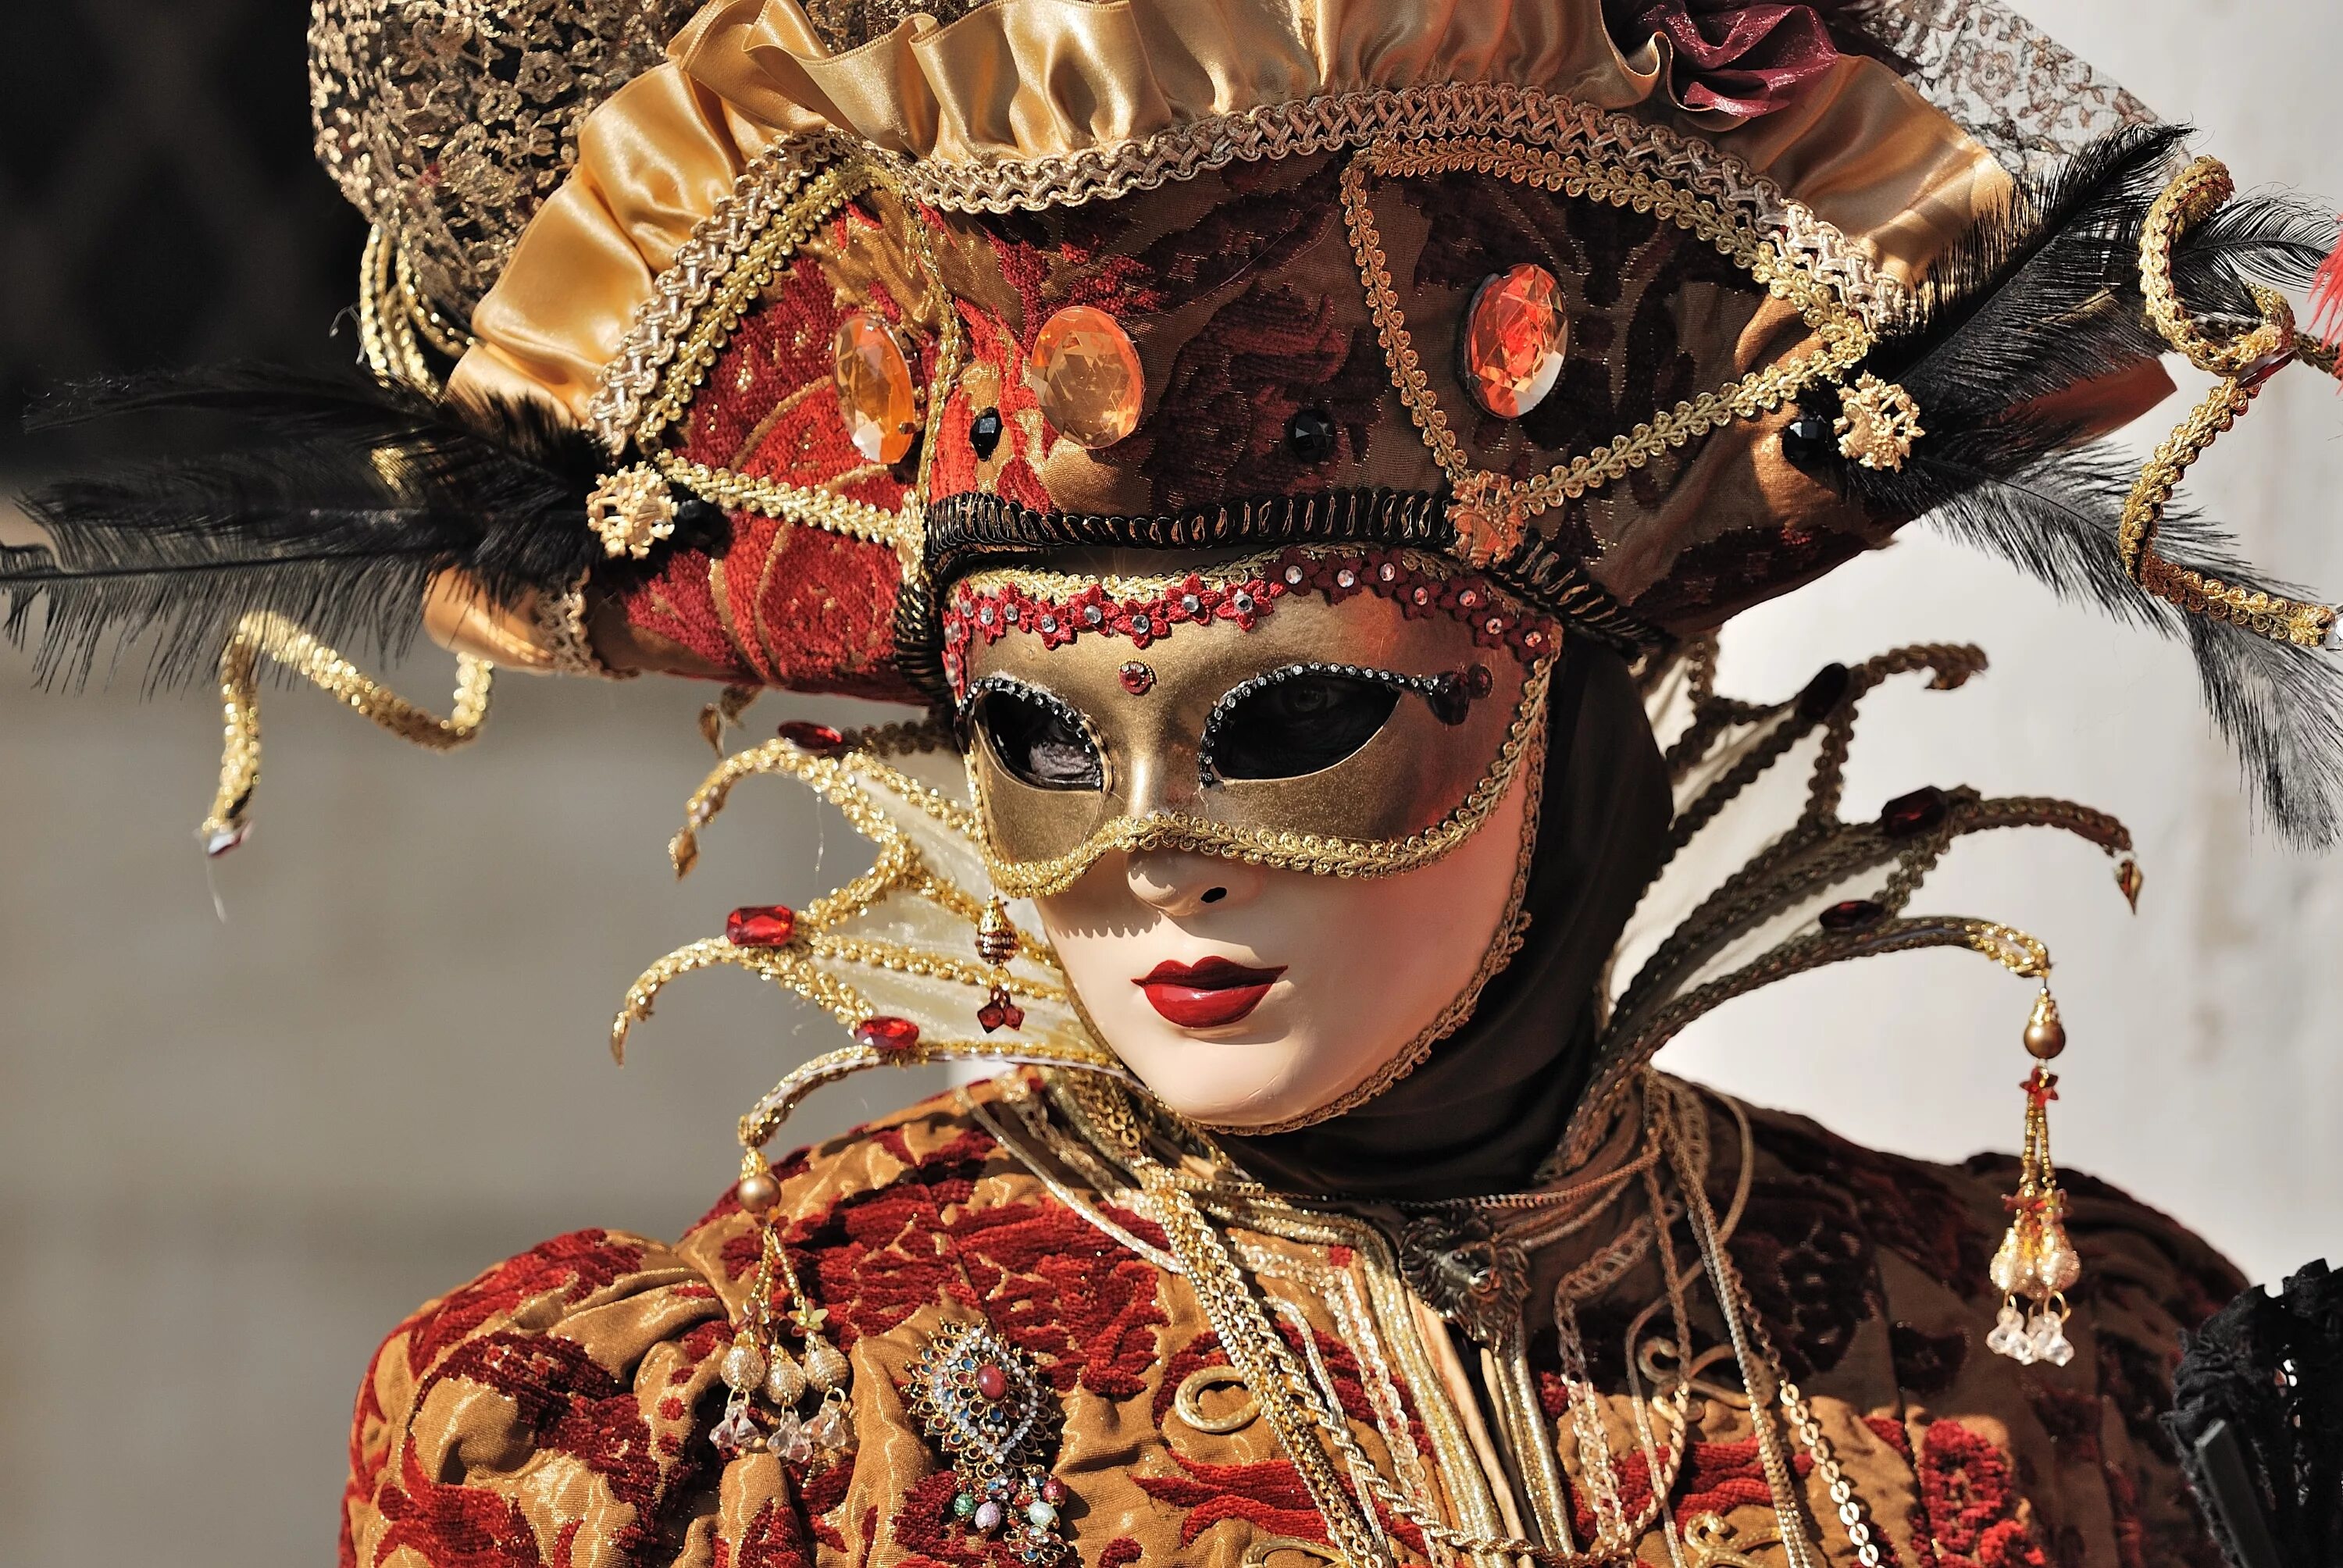 Венецианский карнавал Коломбина. Маска Венецианского карнавала Коломбина. Венецианская дама (dama di Venezia). Венецианский маскарад 2022. Карнавальный человек